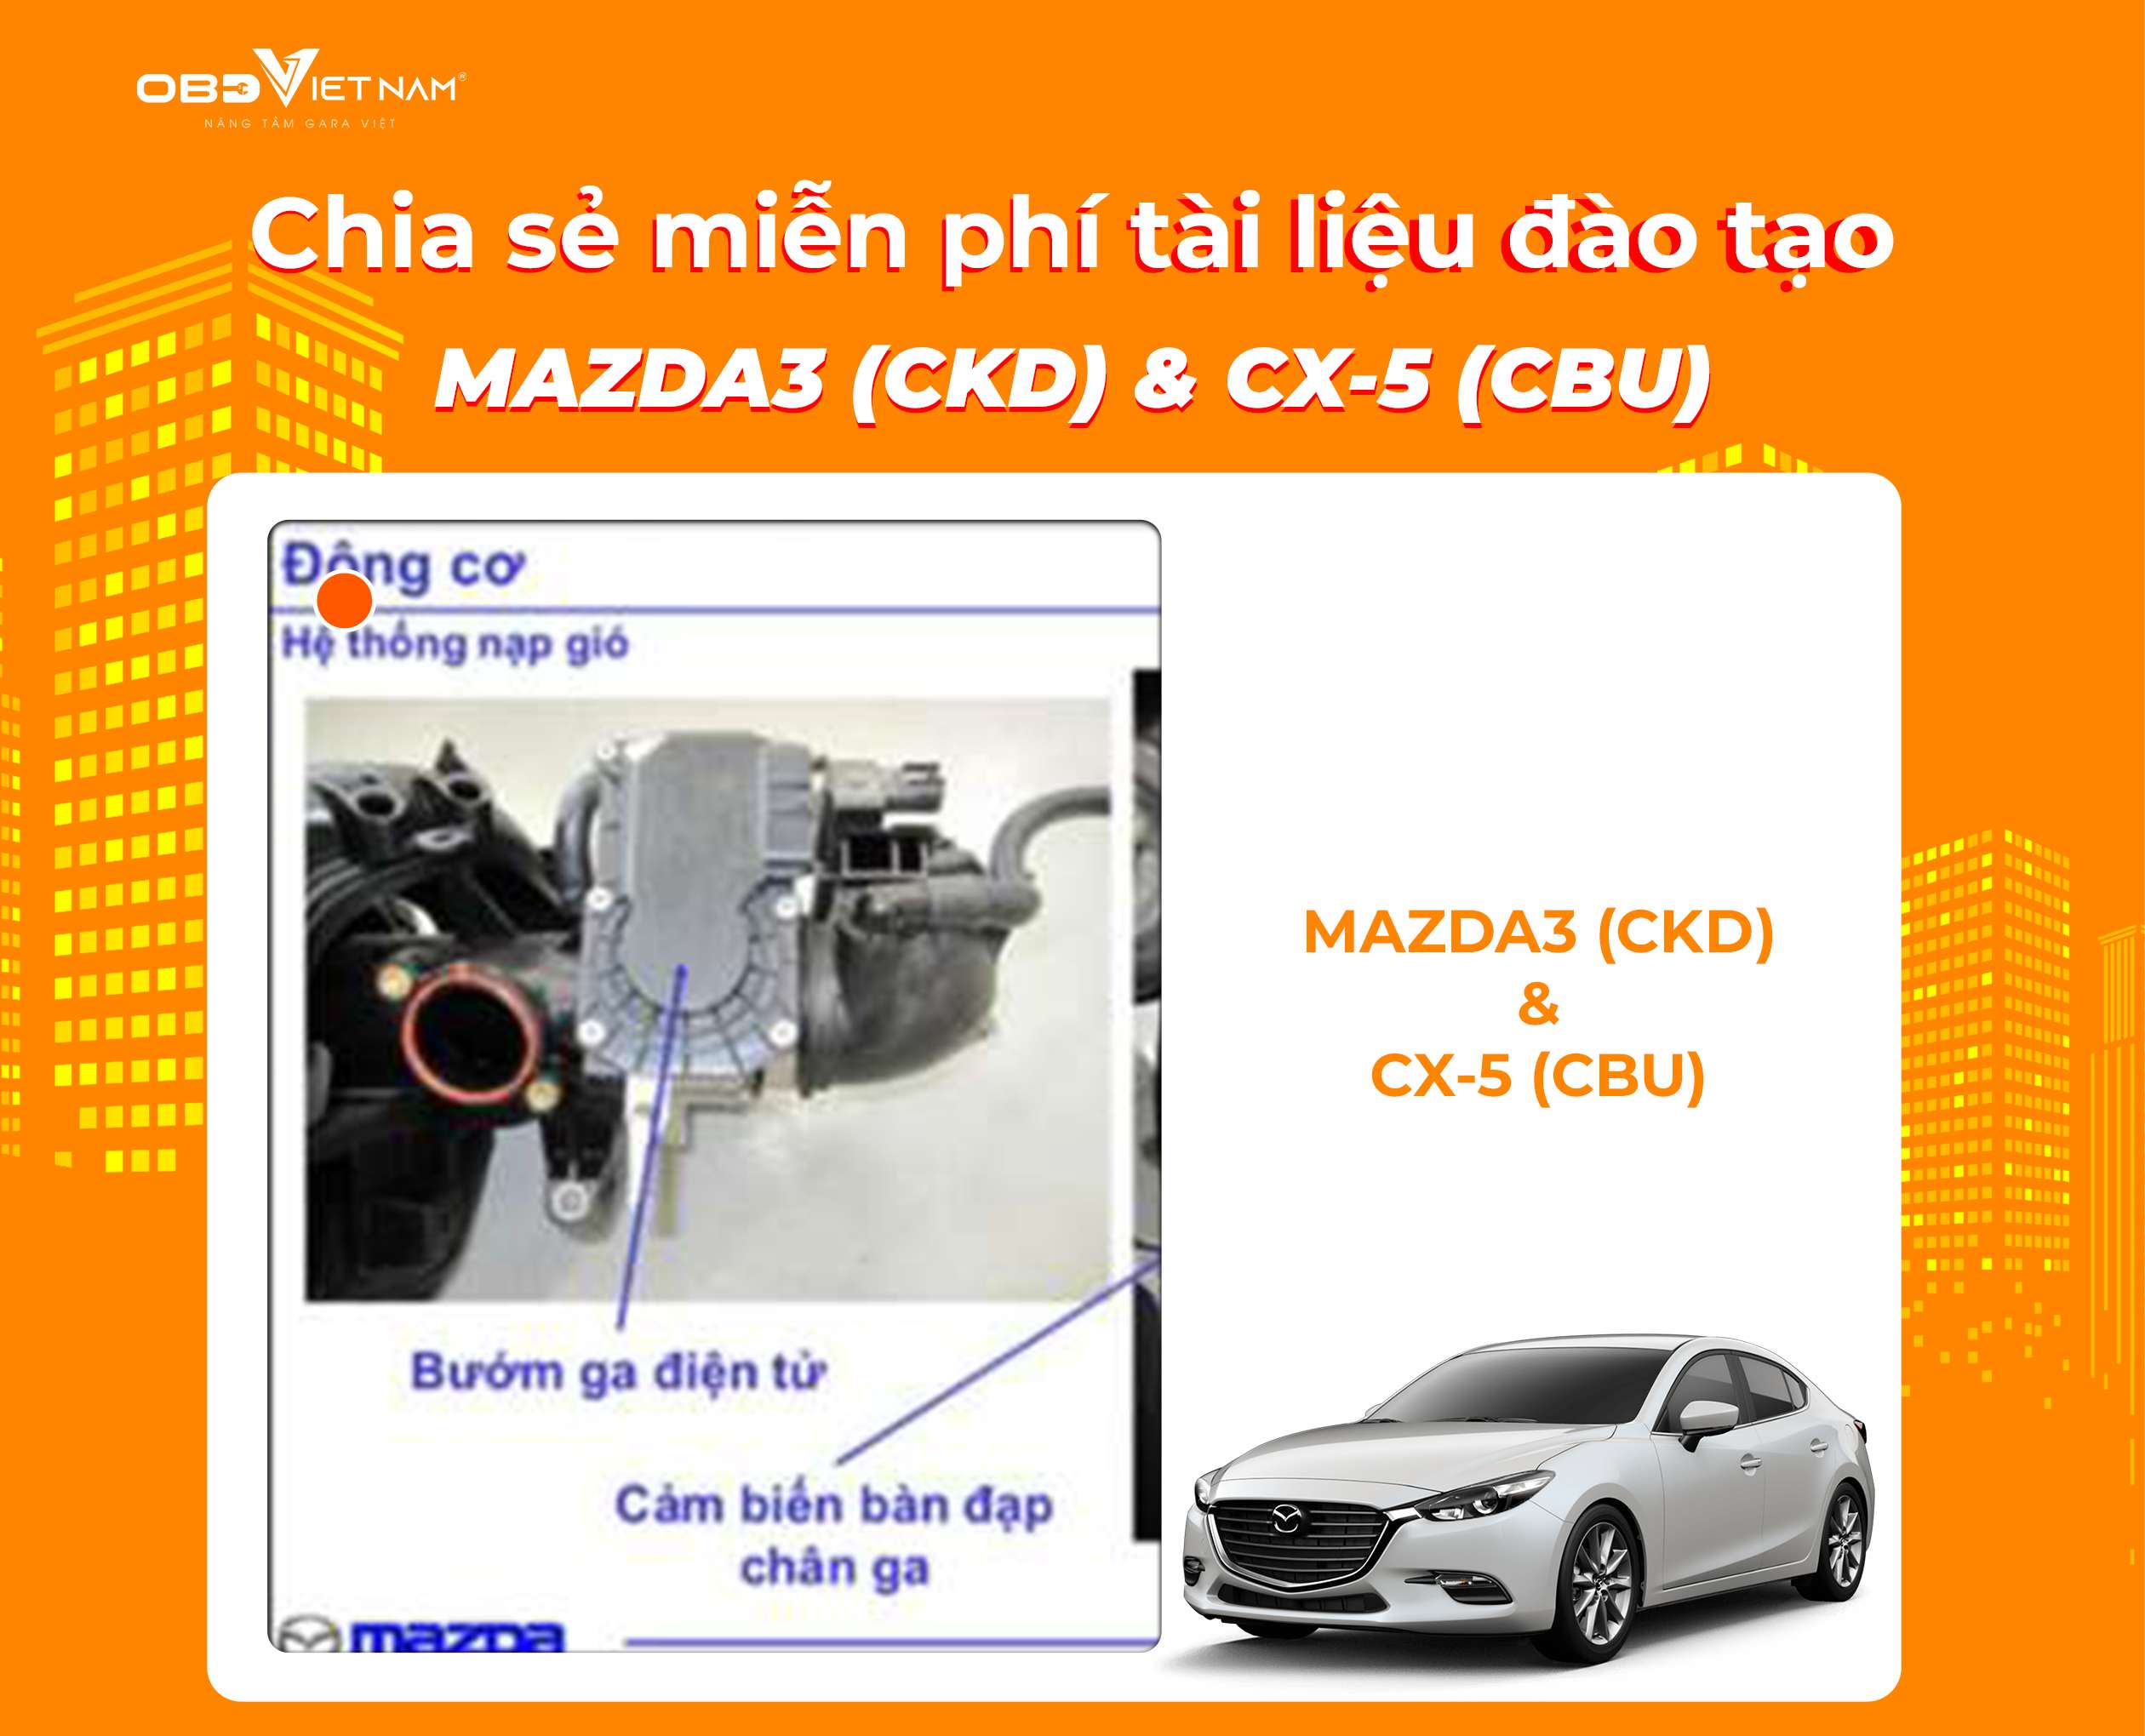 chia-se-tai-lieu-new-model-mazda3-mazdacx5-obdvietnam (1)